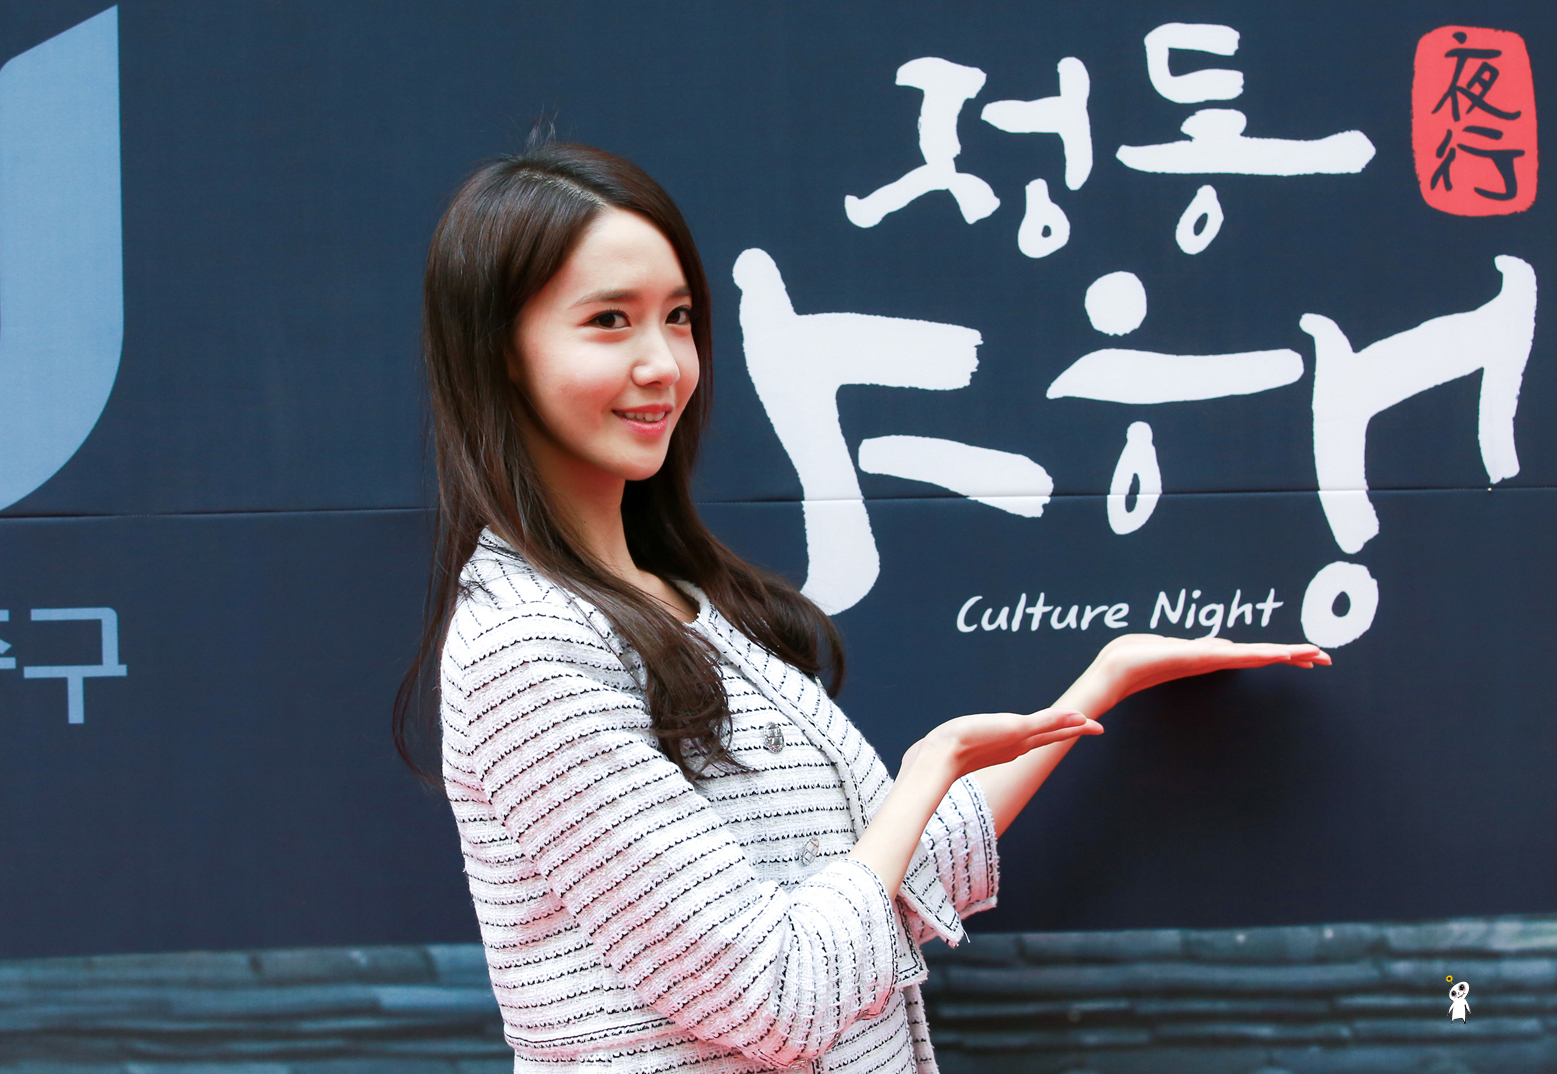 [PIC][29-05-2015]YoonA tham dự "Jung-gu Culture Night Festival" tại Deoksugung vào chiều nay - Page 3 22691F50556AE2A31230D0